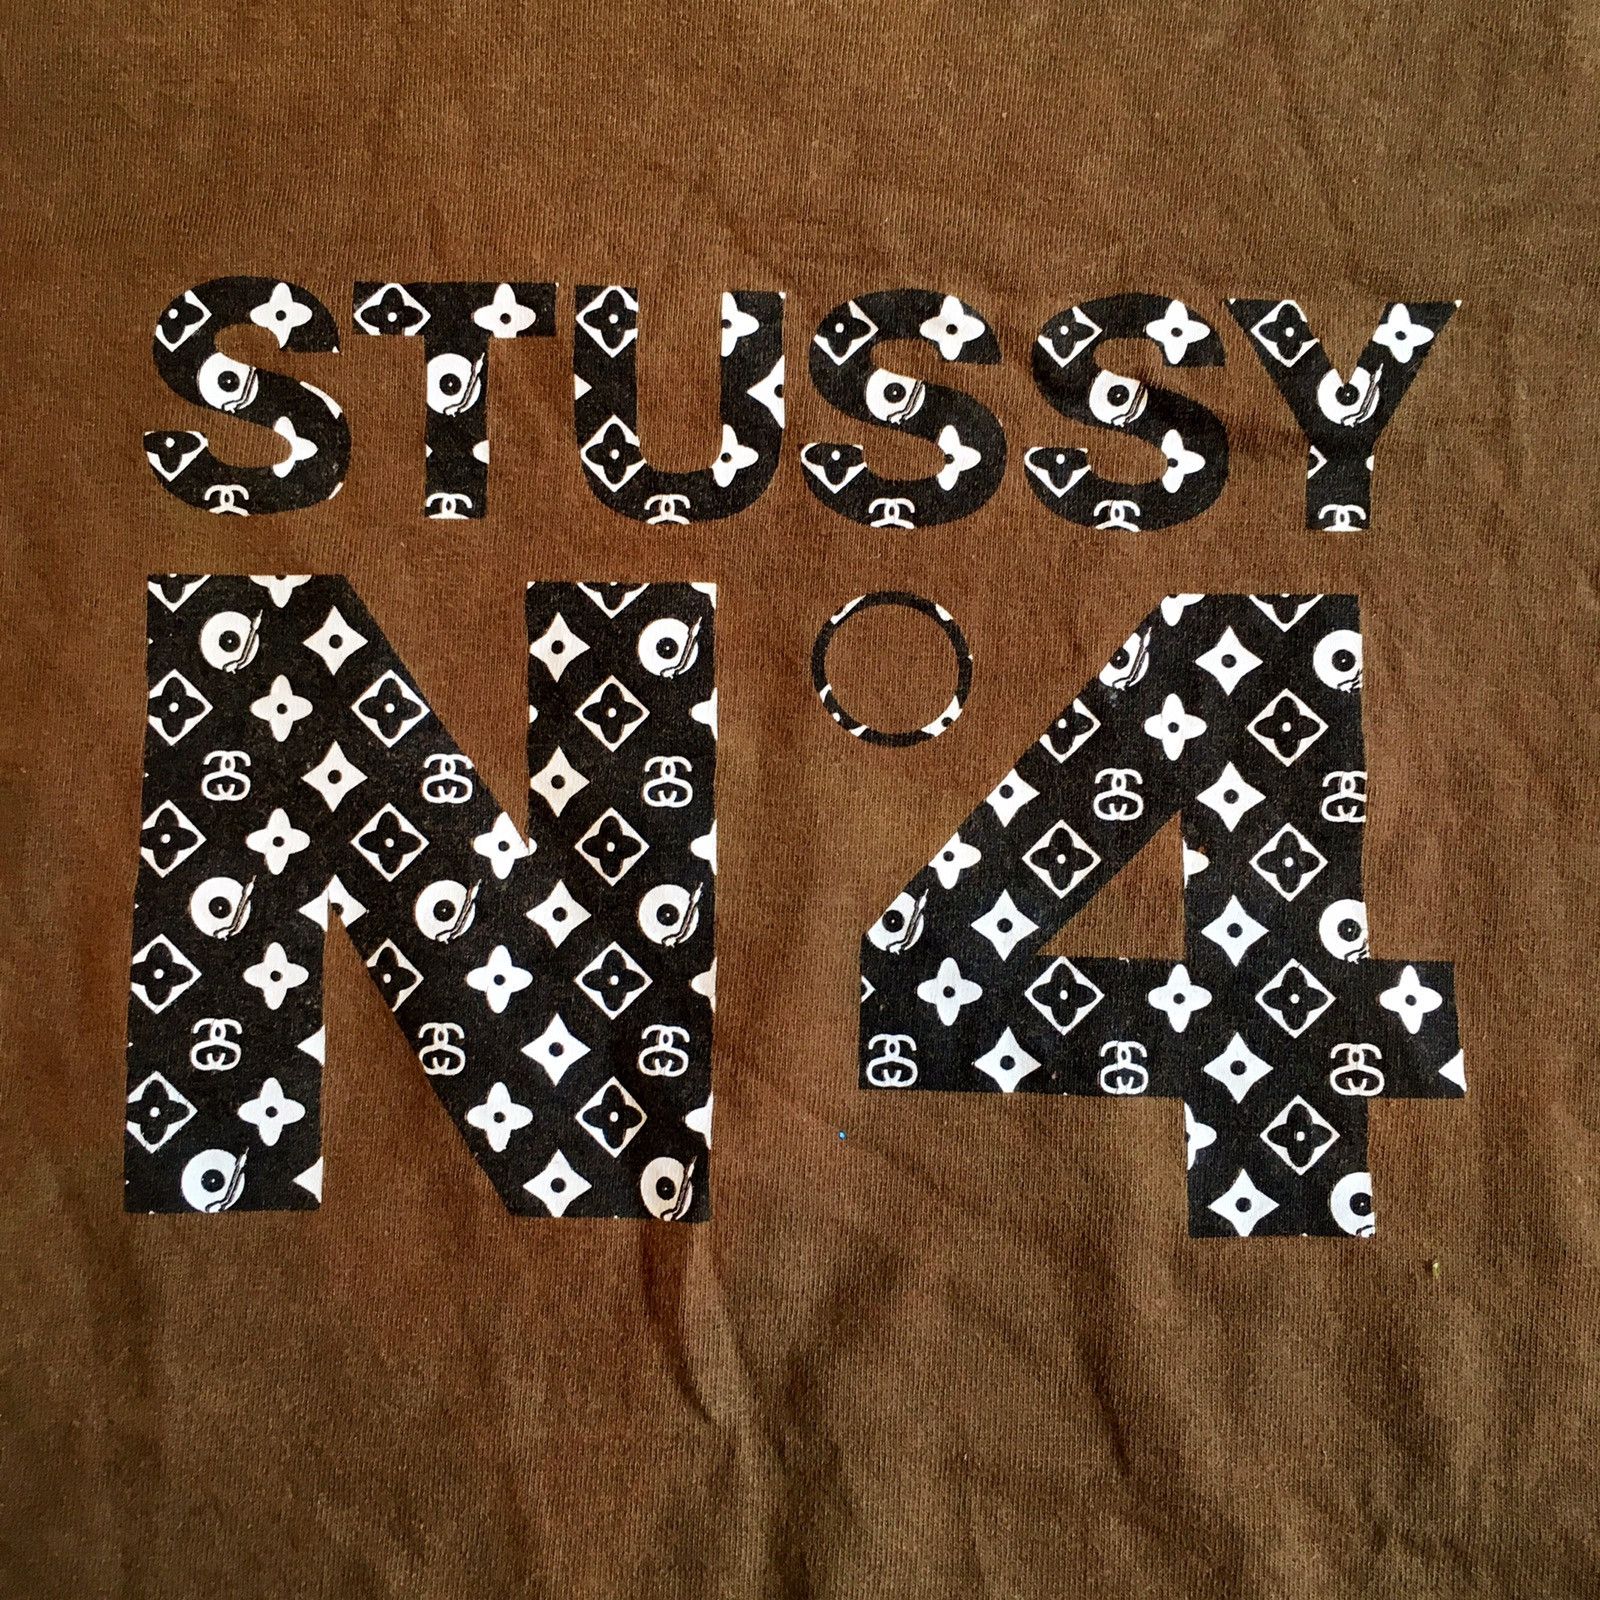 90's Stussy LV monogram crewneck sweatshirt (L)